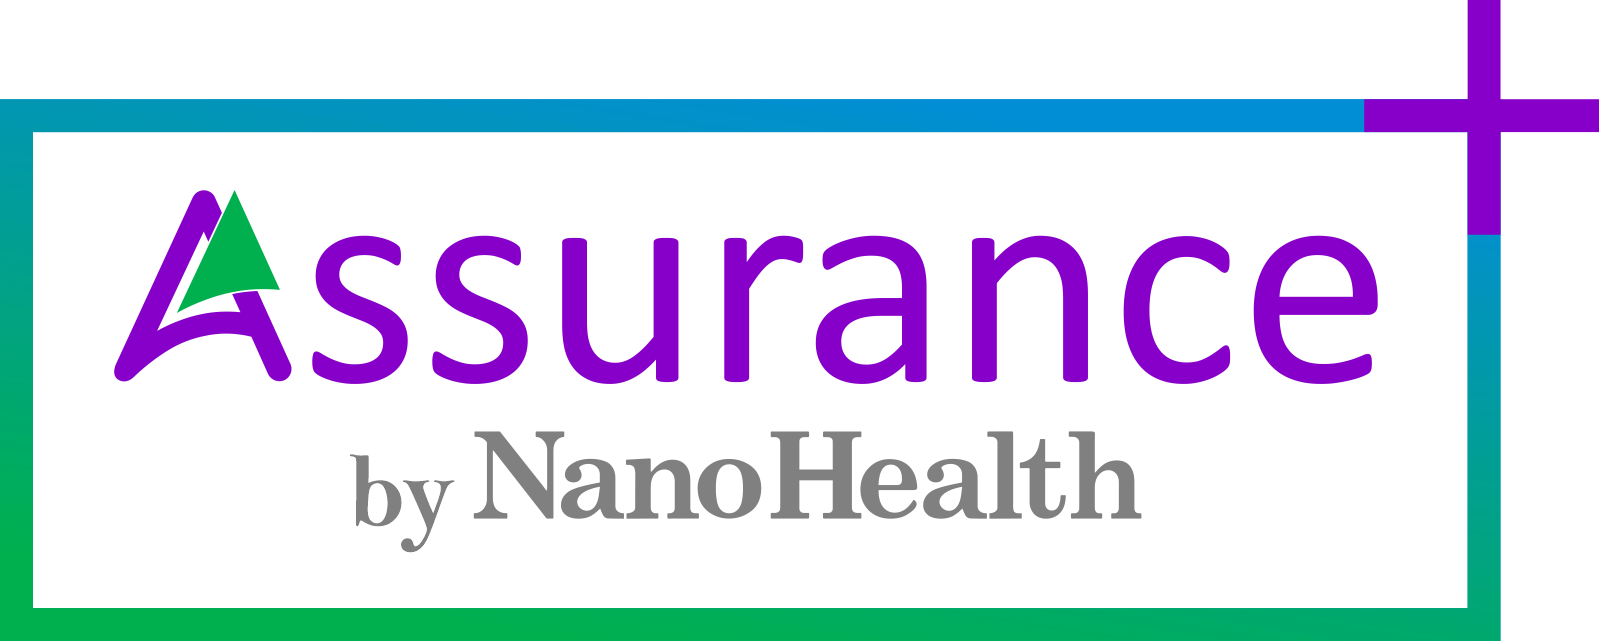 Assurance by NanoHealth logo